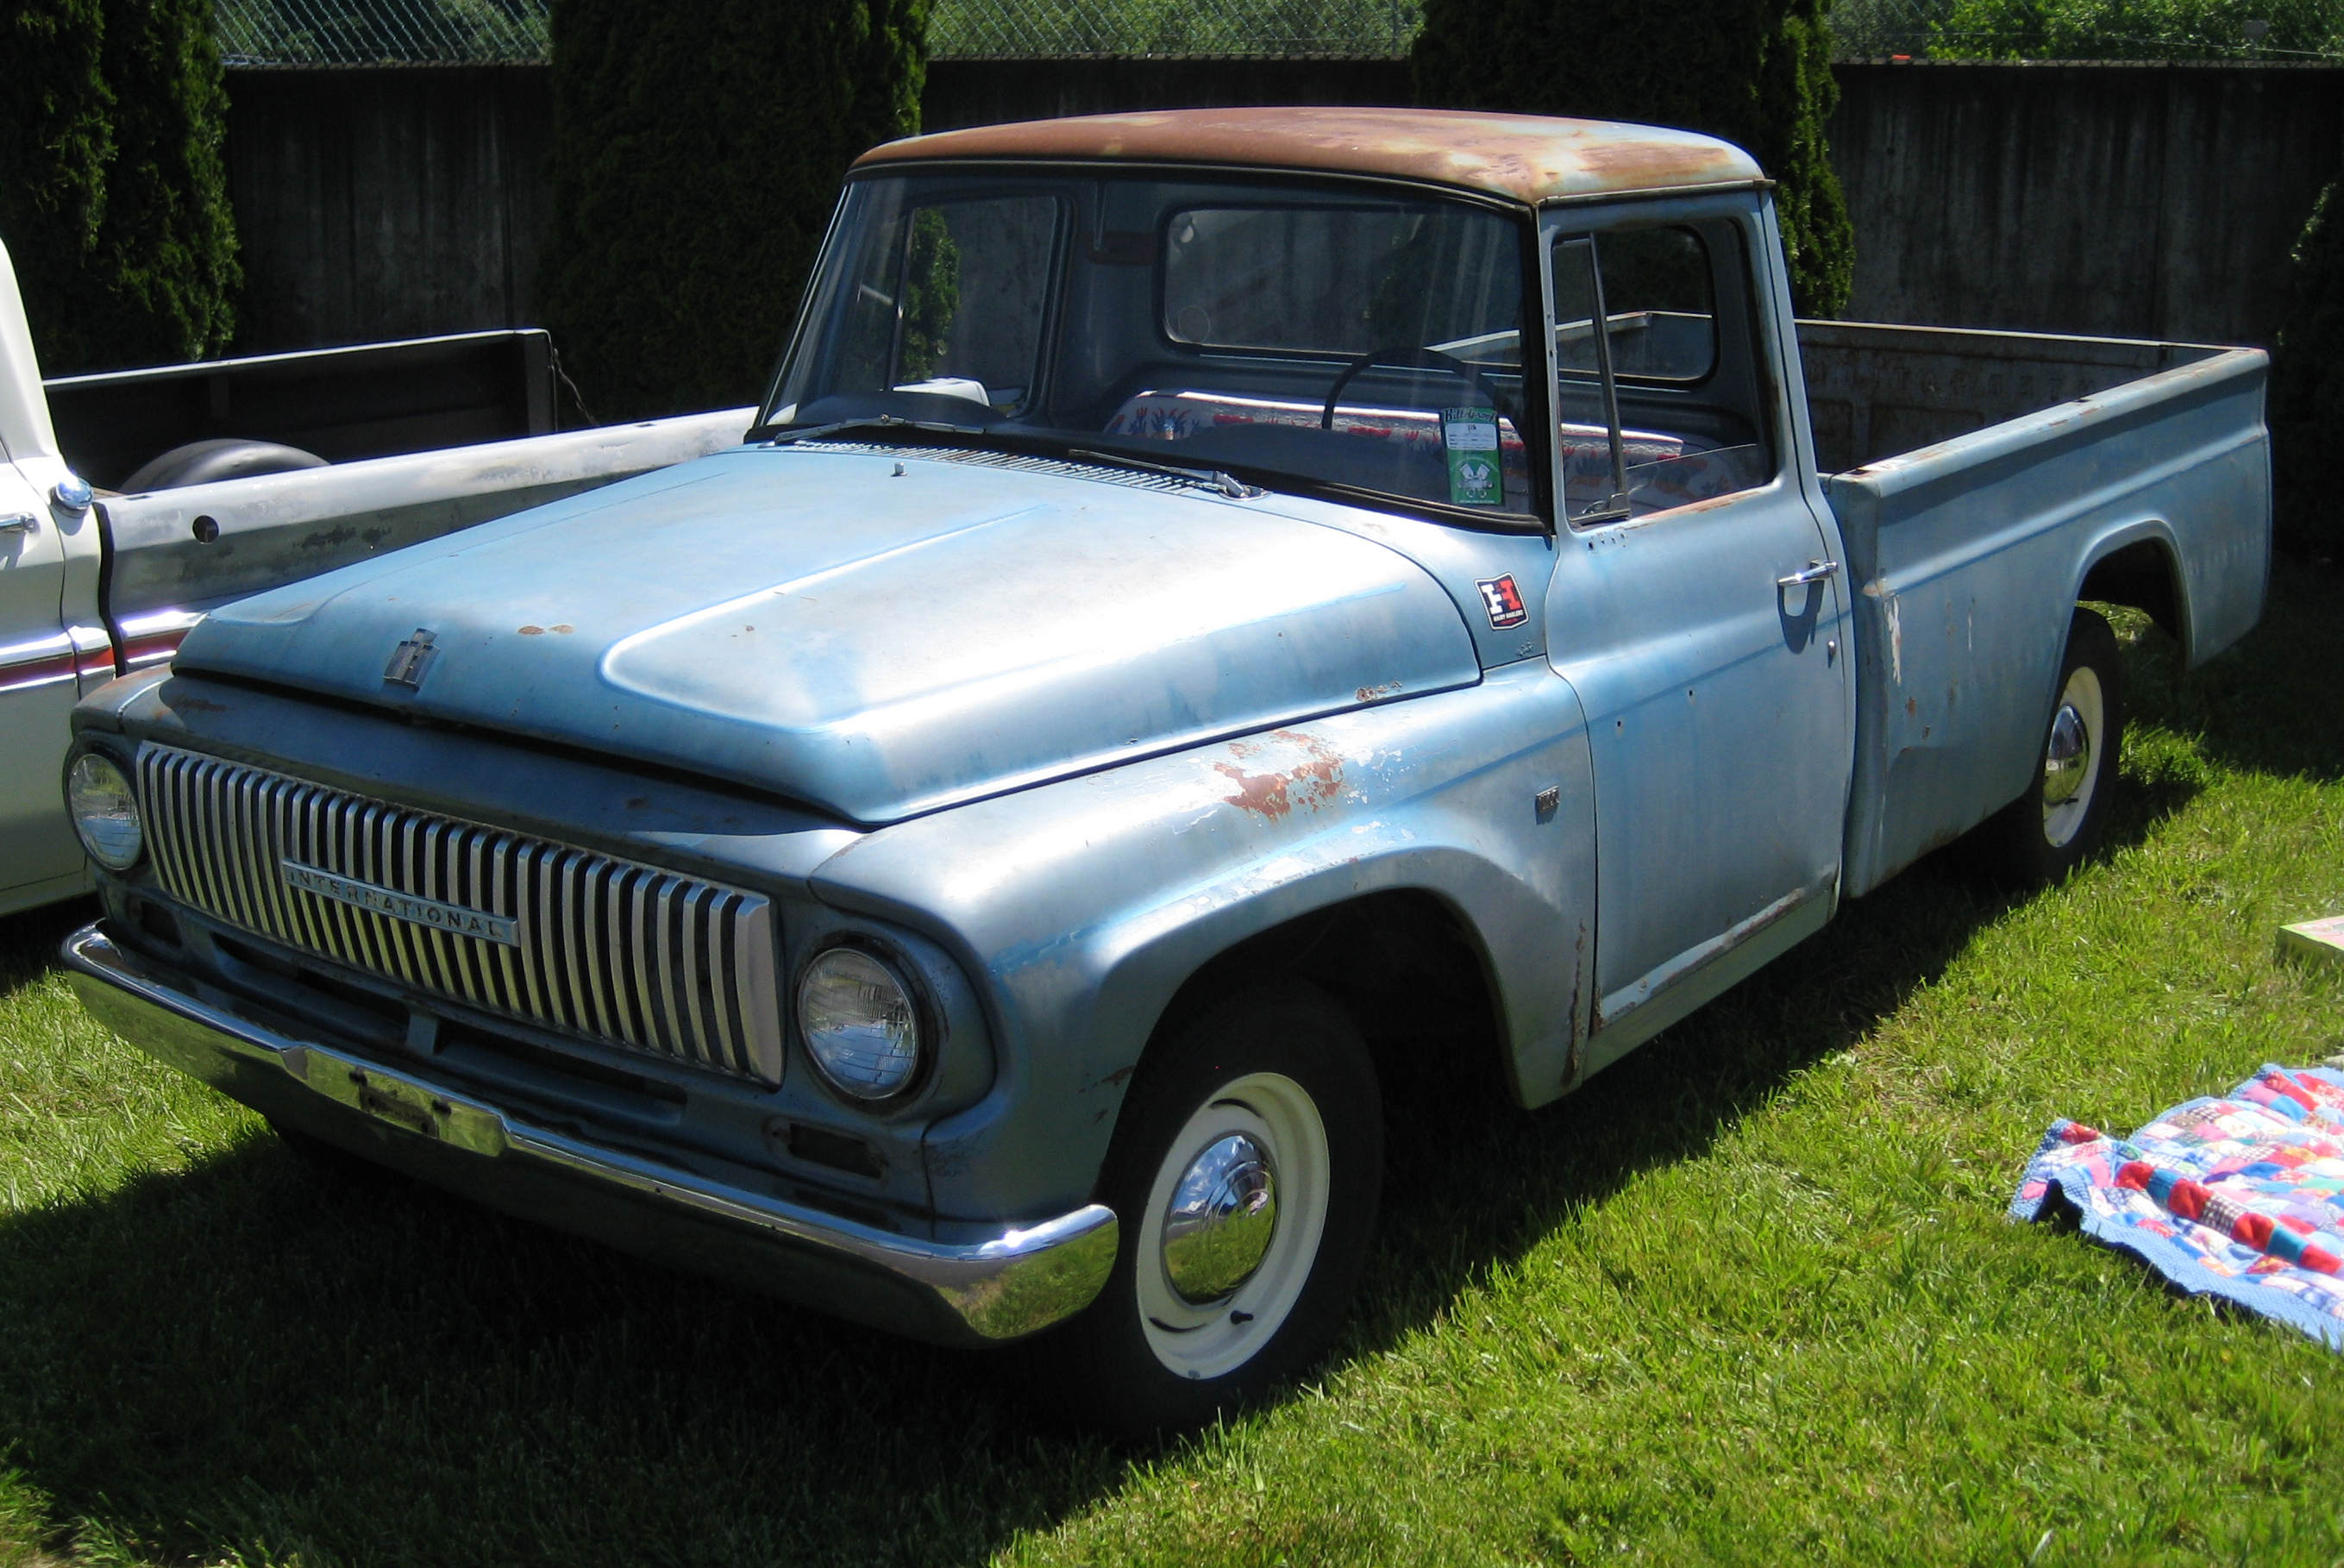 International Pickup 1962 #12